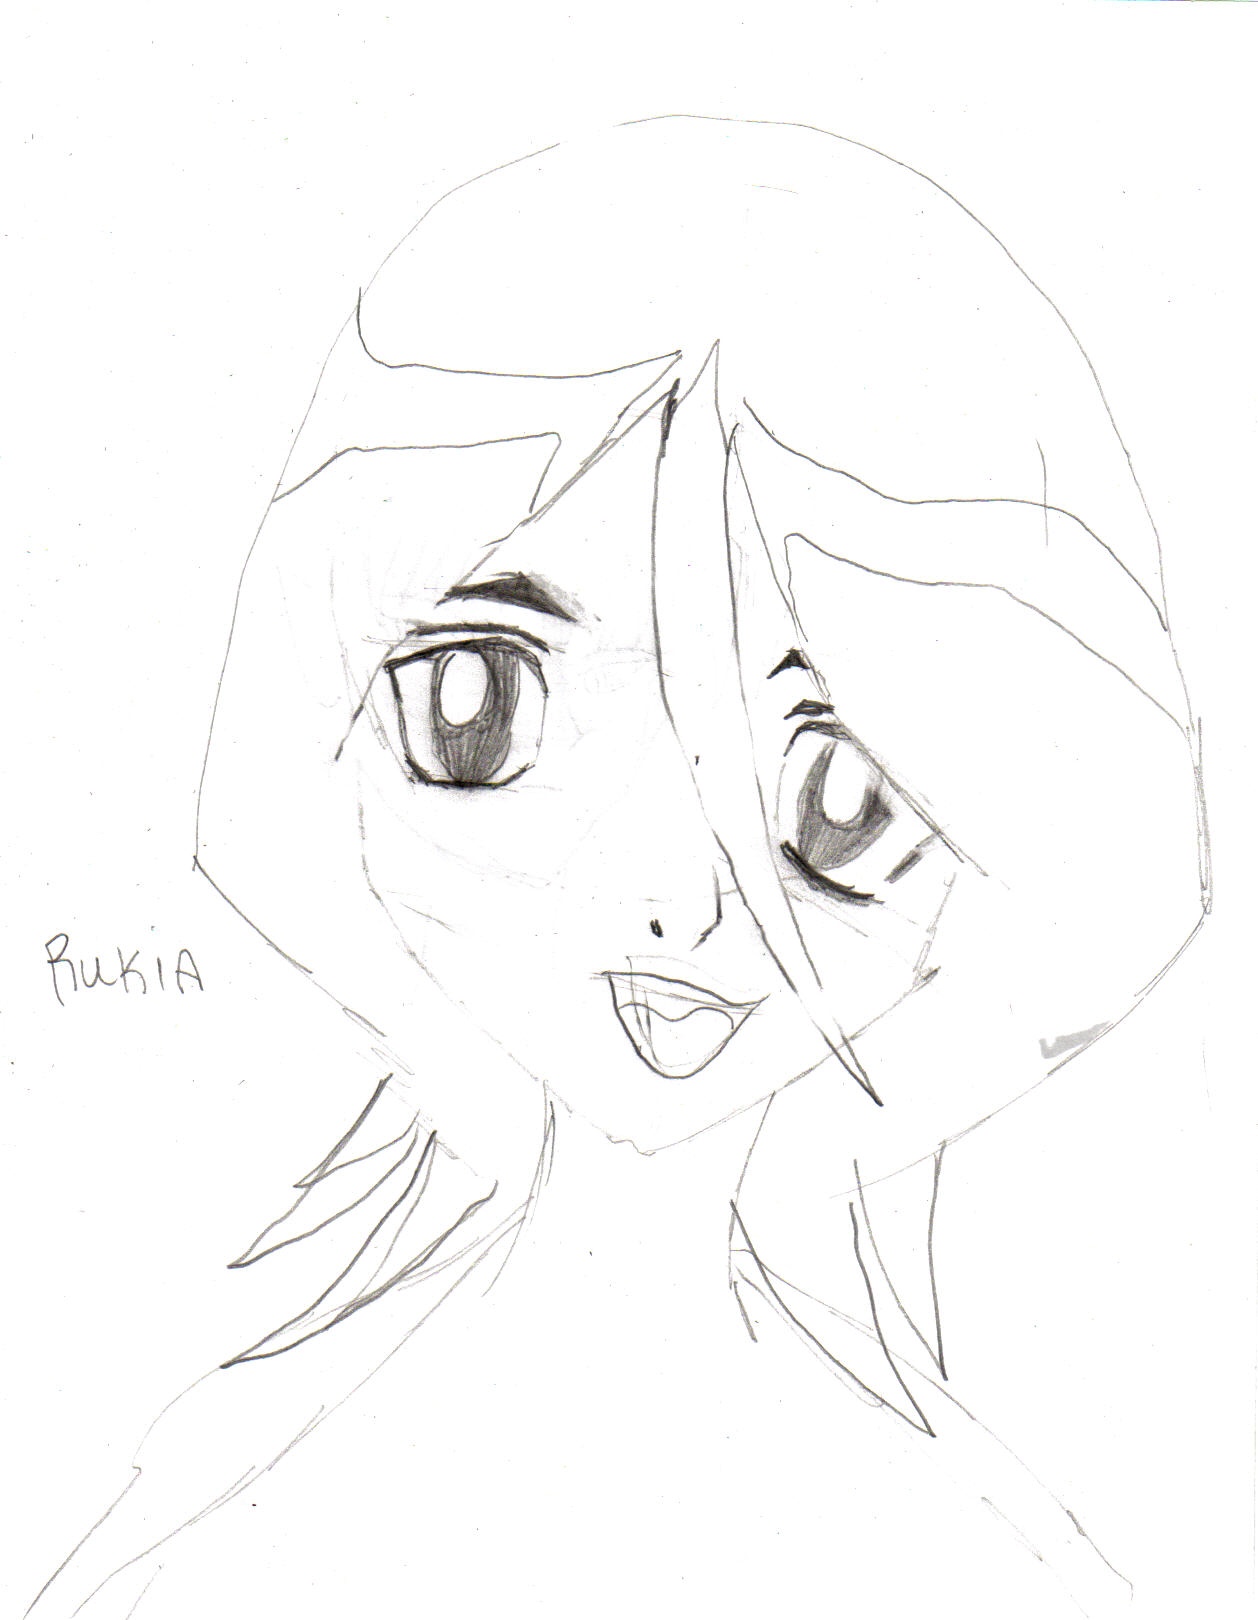 Rukia by elfgirl05